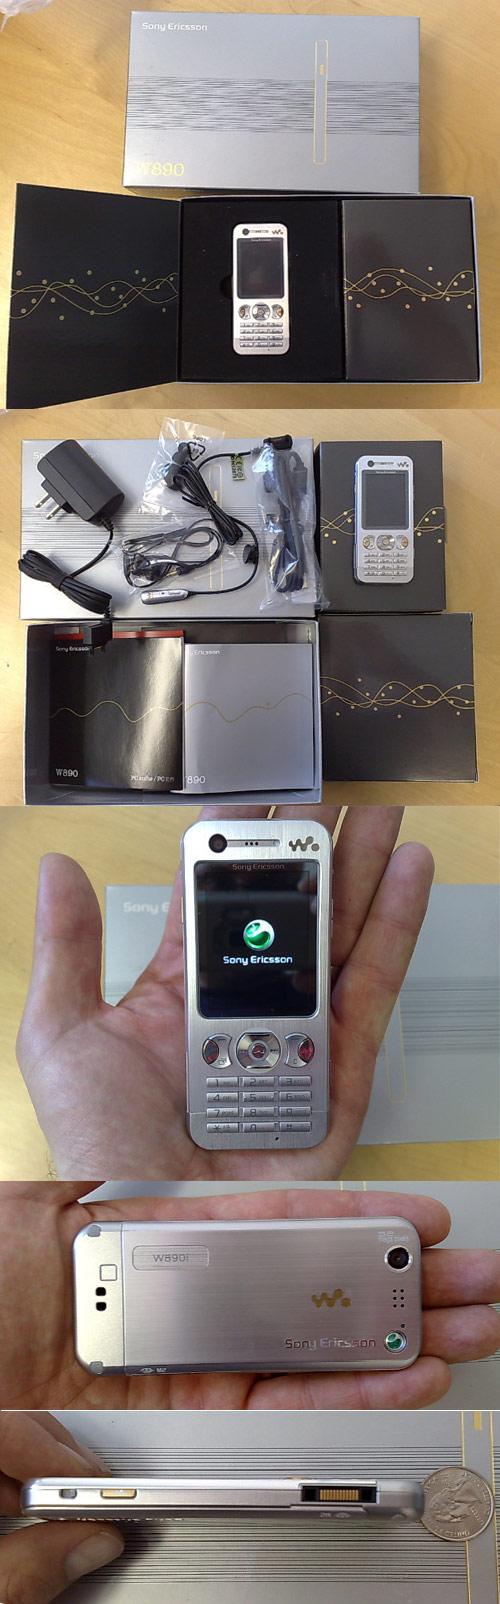 Sony Ericsson W890 unboxing images